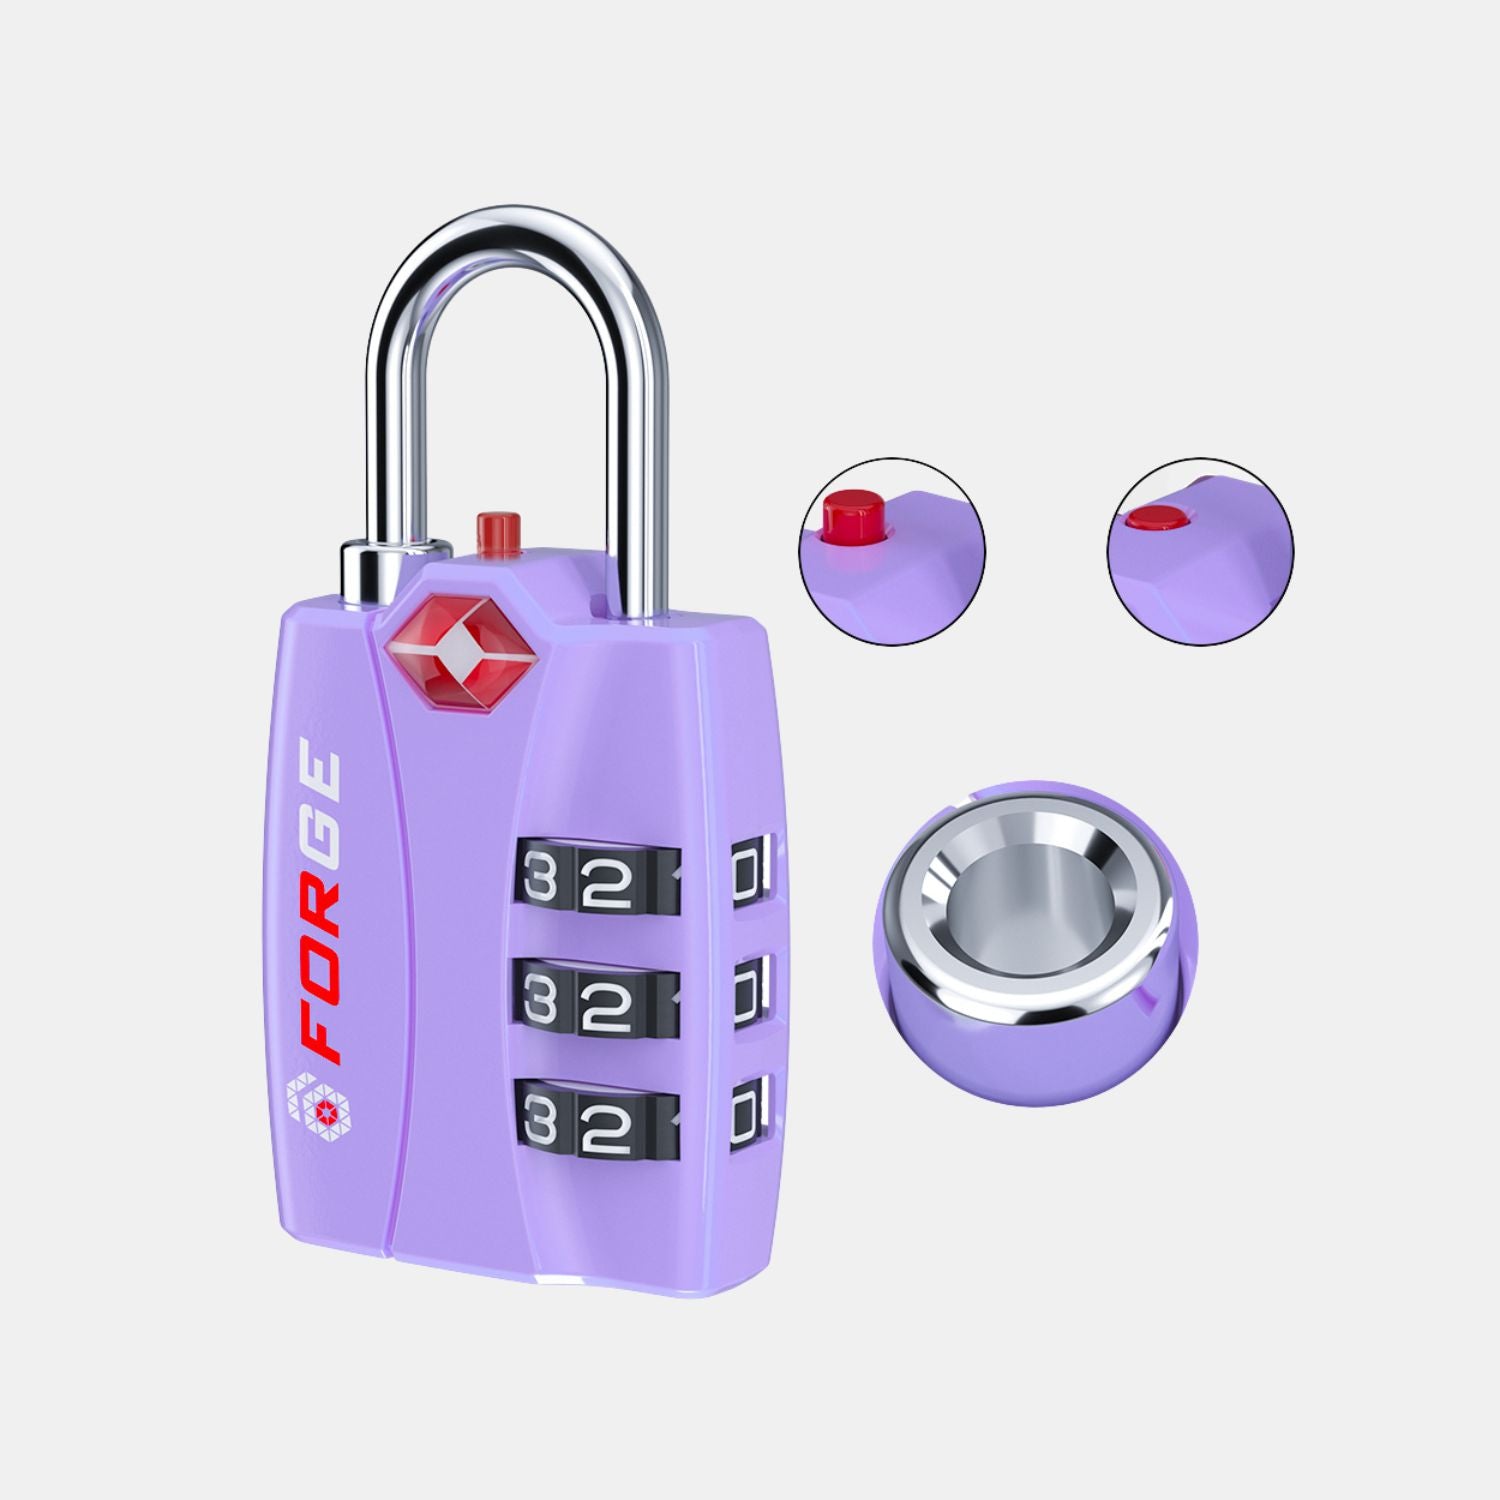 TSA-Approved Luggage Locks: 3-Digit Combination, Open Alert Indicator, Light Purple 4 Locks